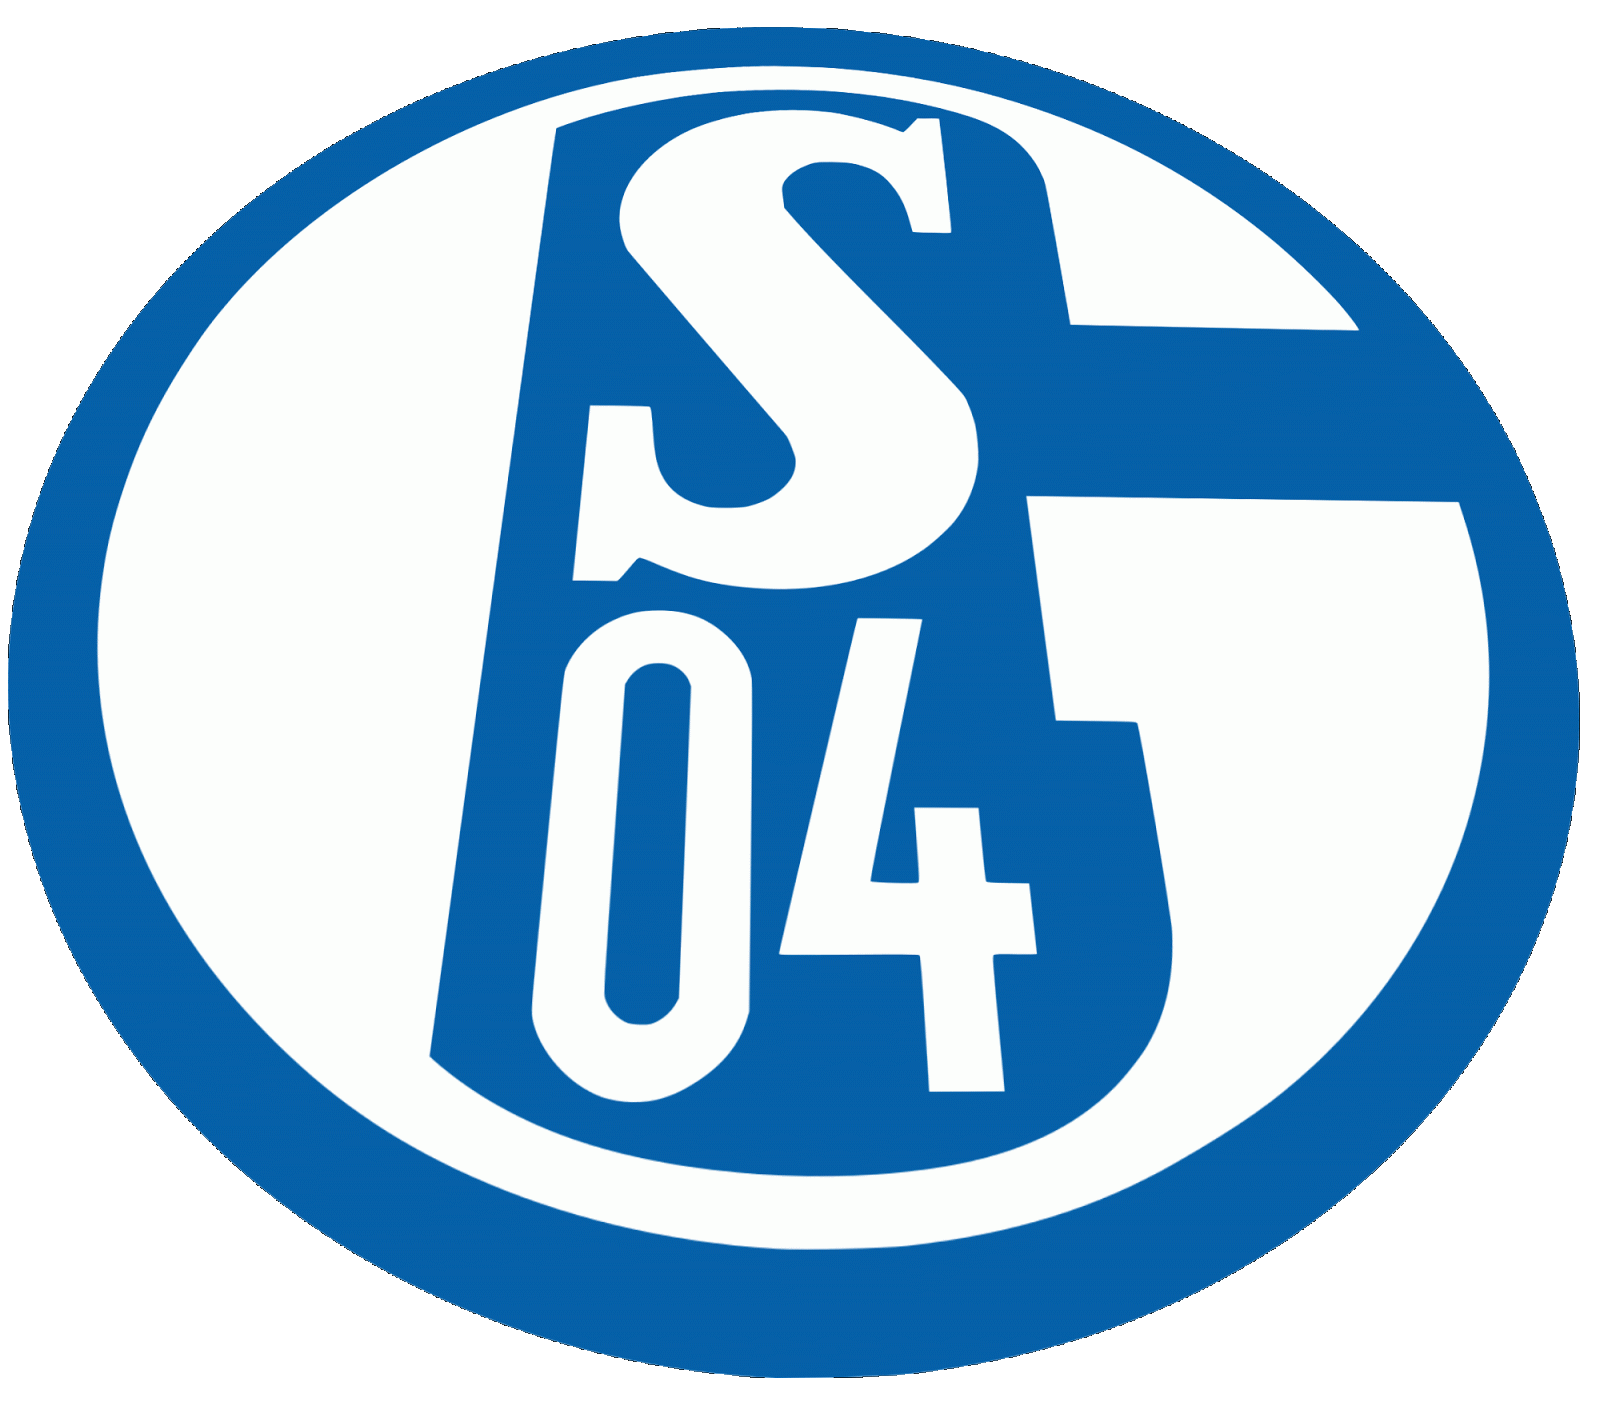 FC Schalke 04 badge